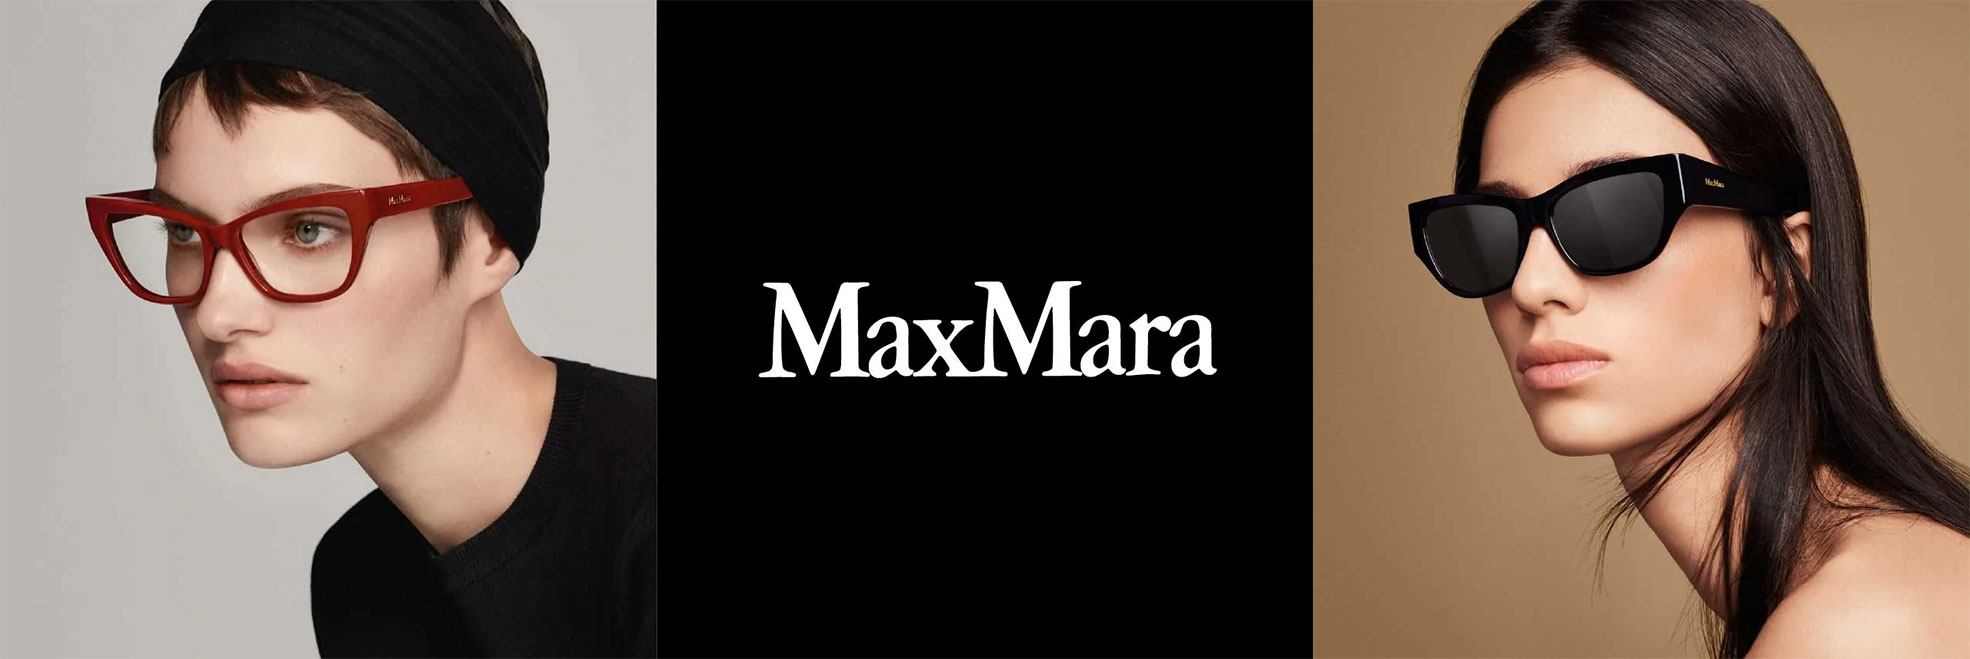 MAX MARA - MAX MARA